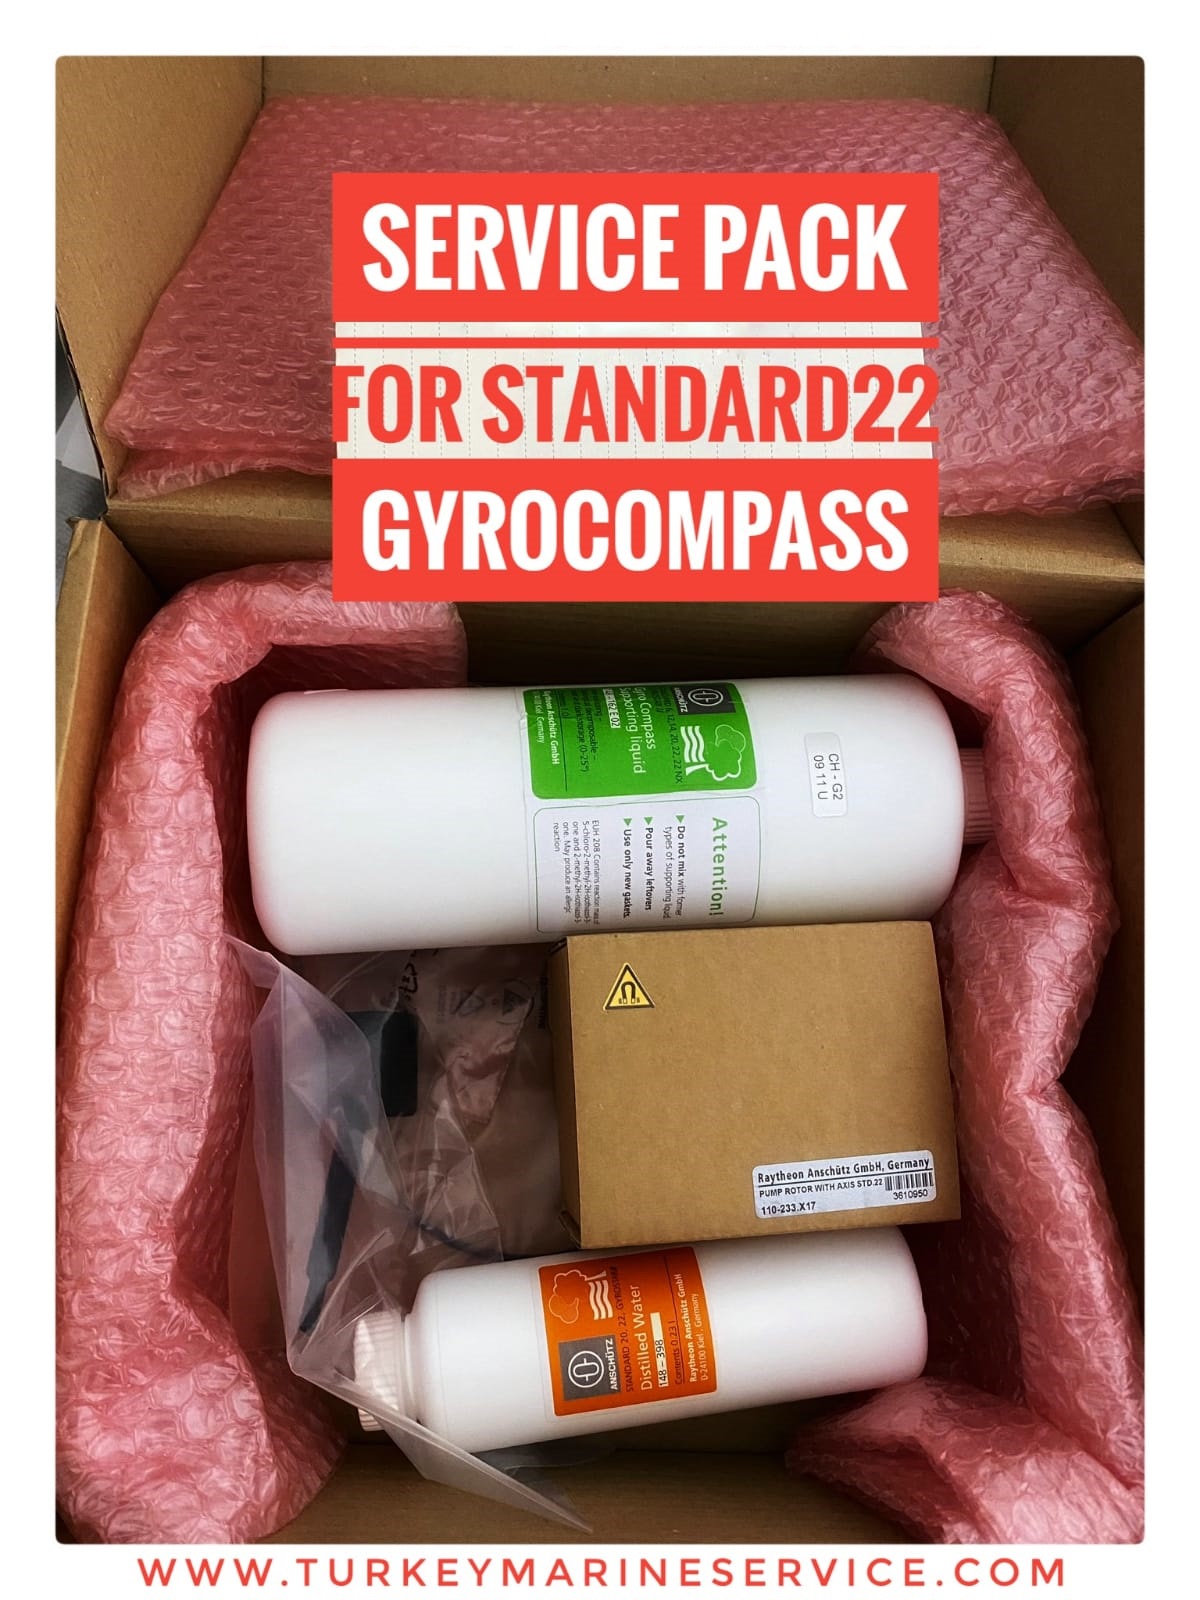 standard 22 service pack gyrocompass